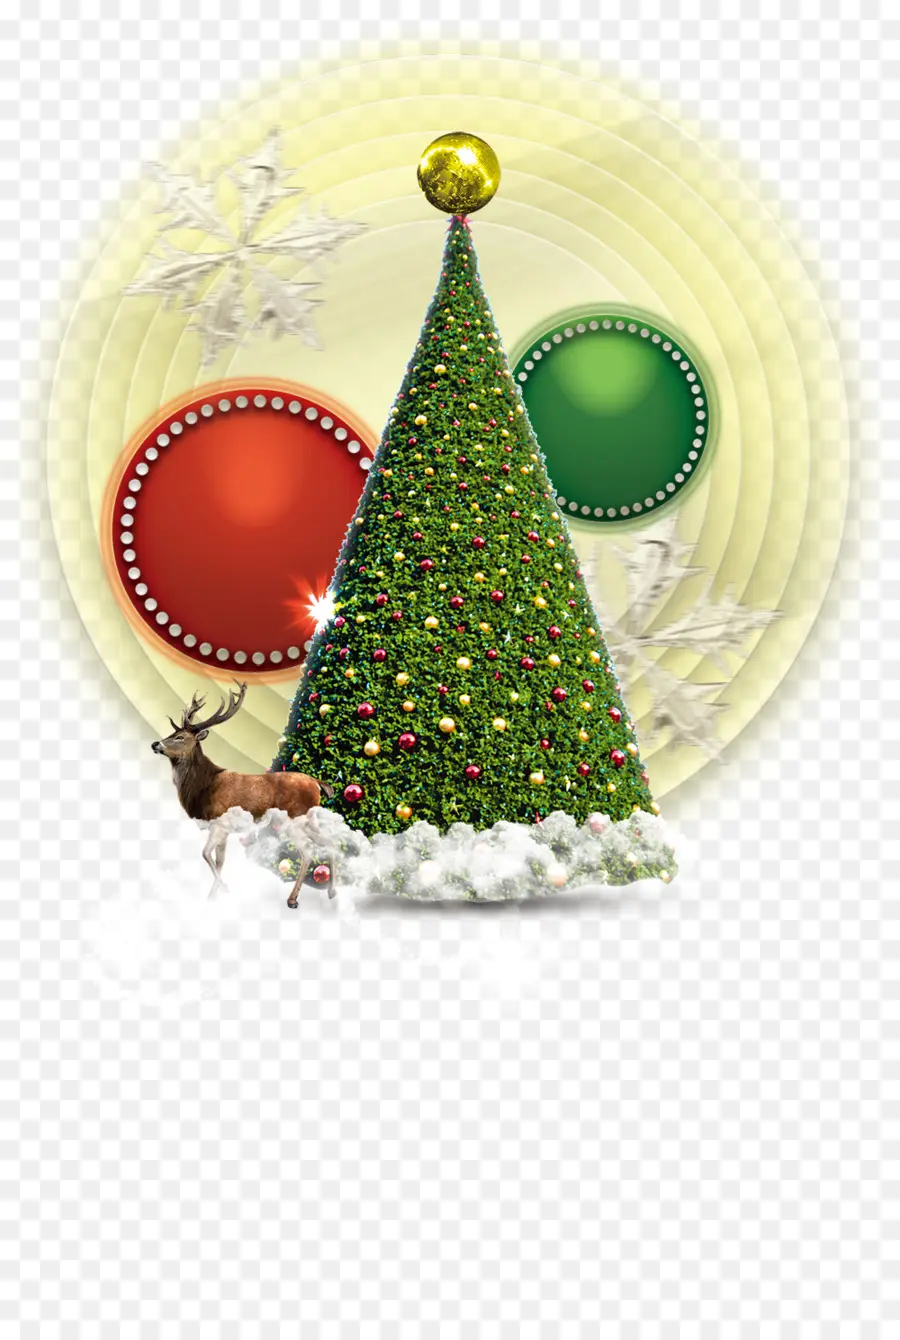 Ornamen Natal，Pohon Natal PNG